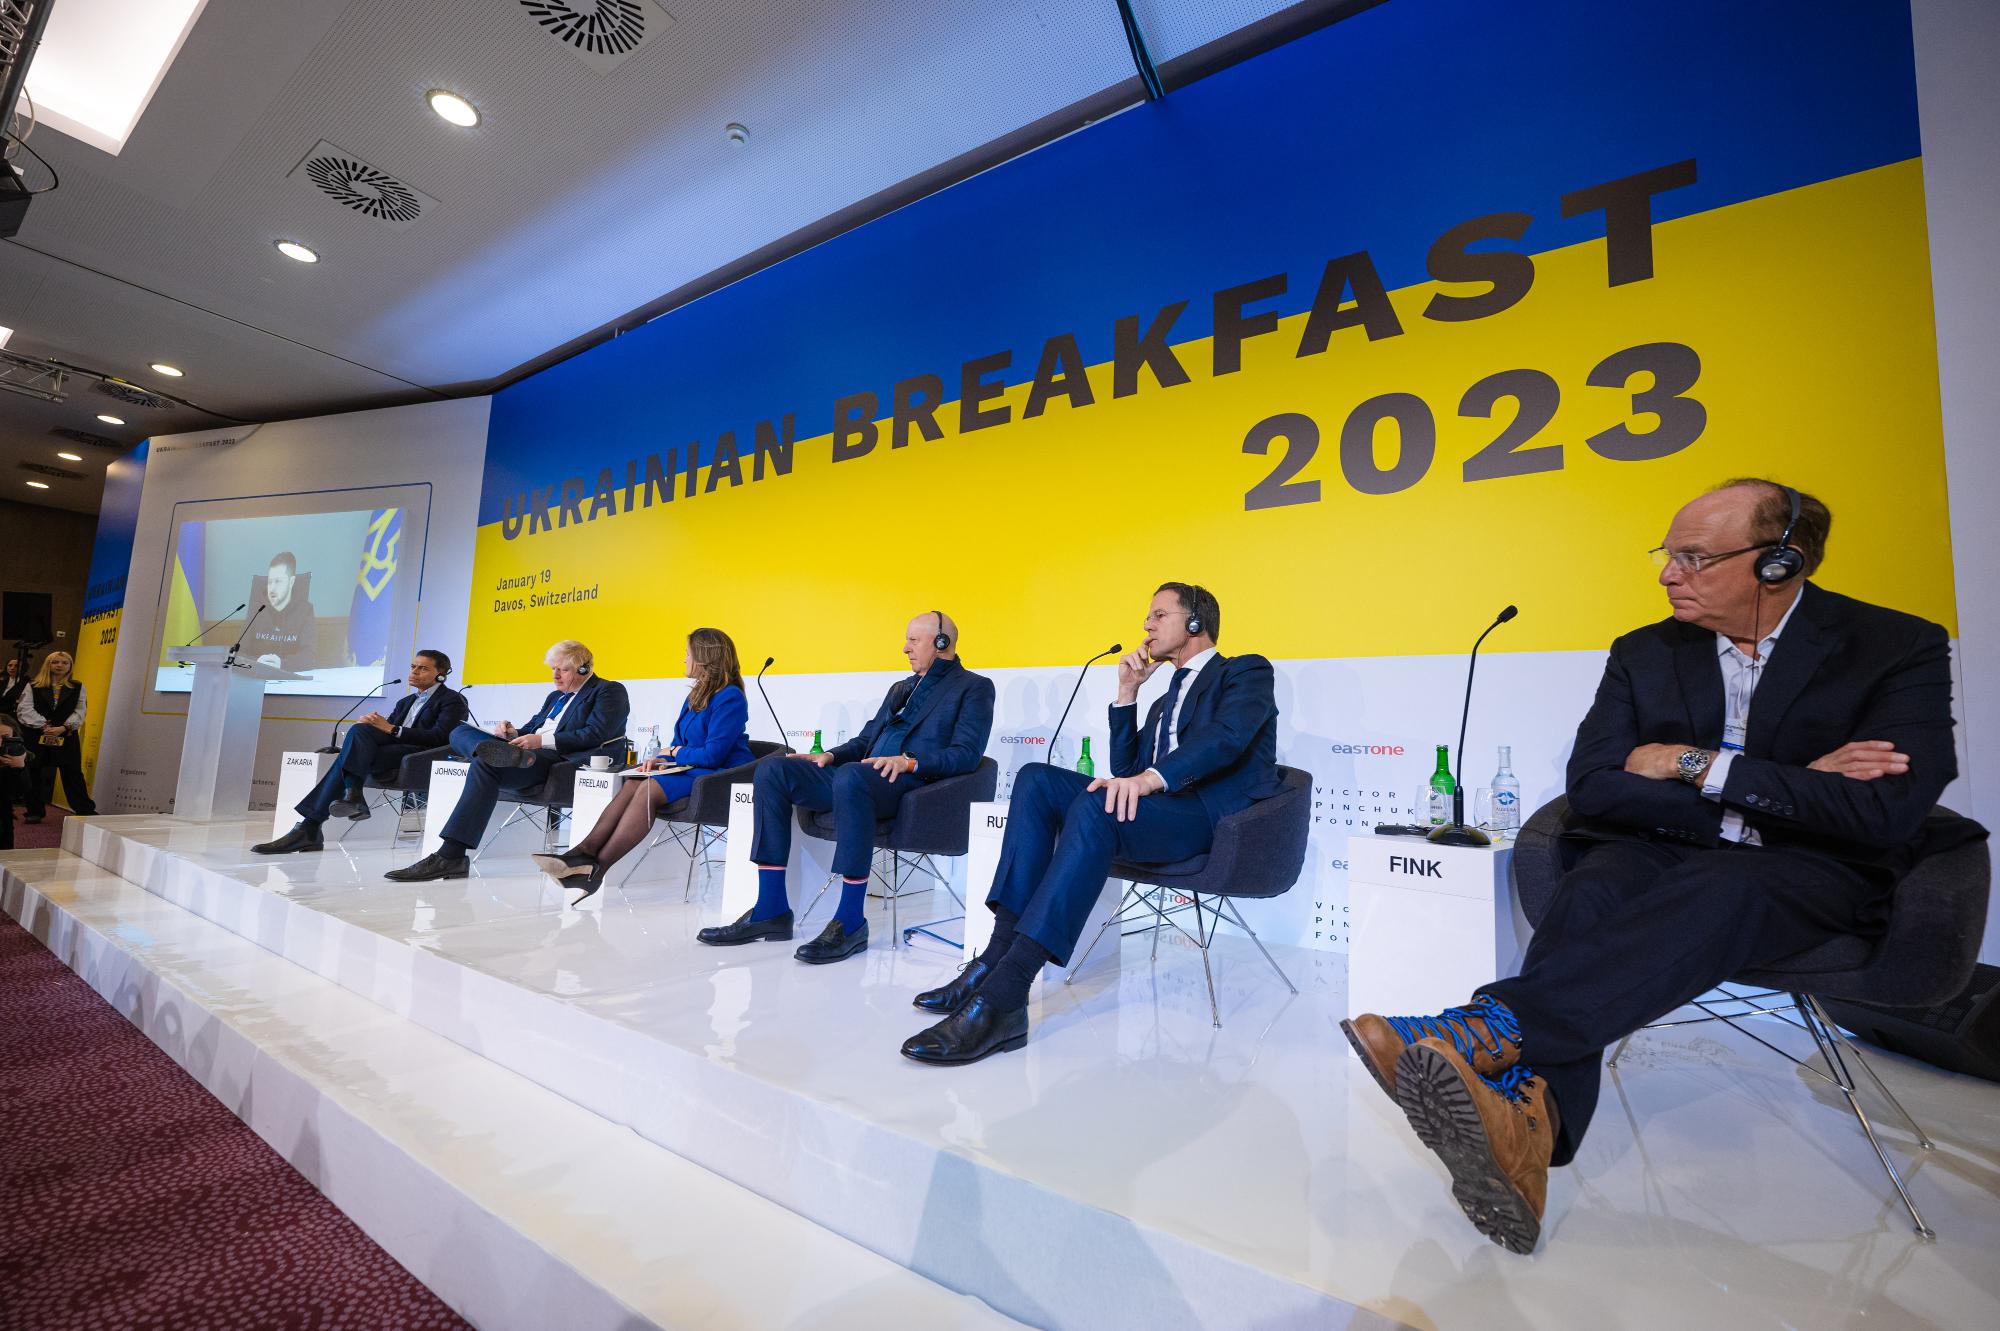 Ukrainian Breakfast Discussion in Davos 2023